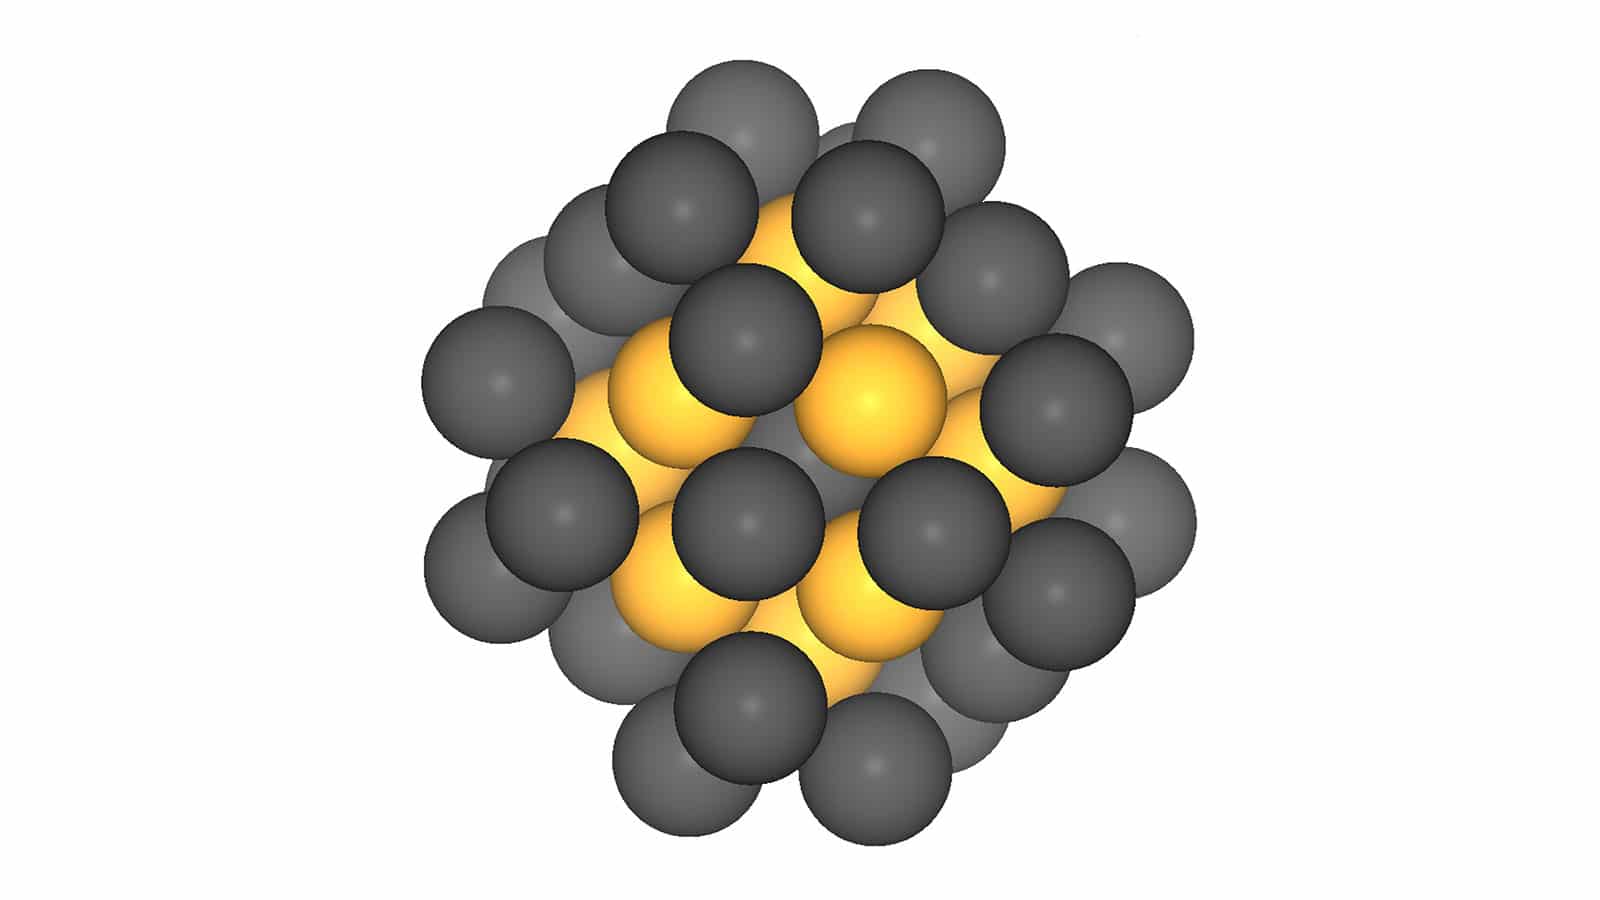 Platin-nanoparticles with 40 atoms. Image: B. Garlyyev / TUM